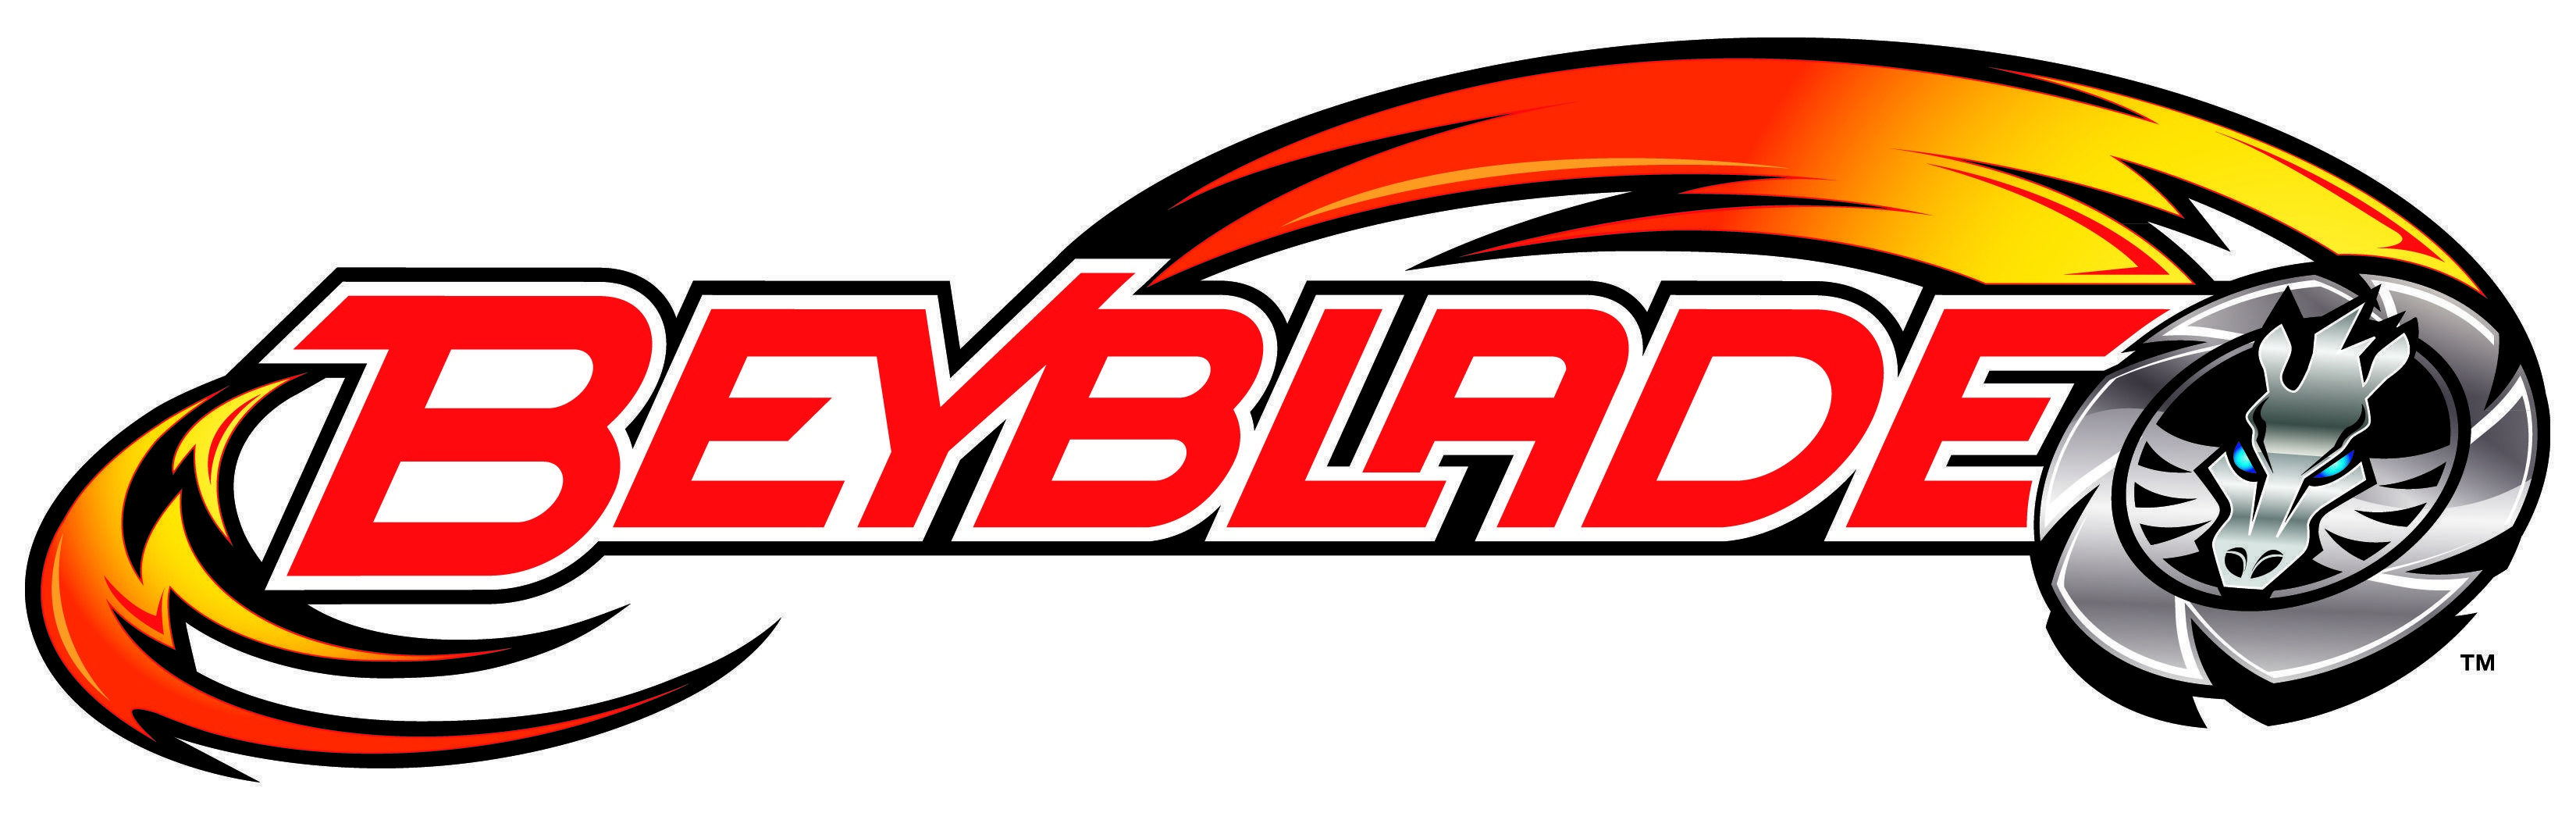 Beyblade Logo - beyblade logo | Cake Reference & Tutorials in 2019 | 9th birthday ...